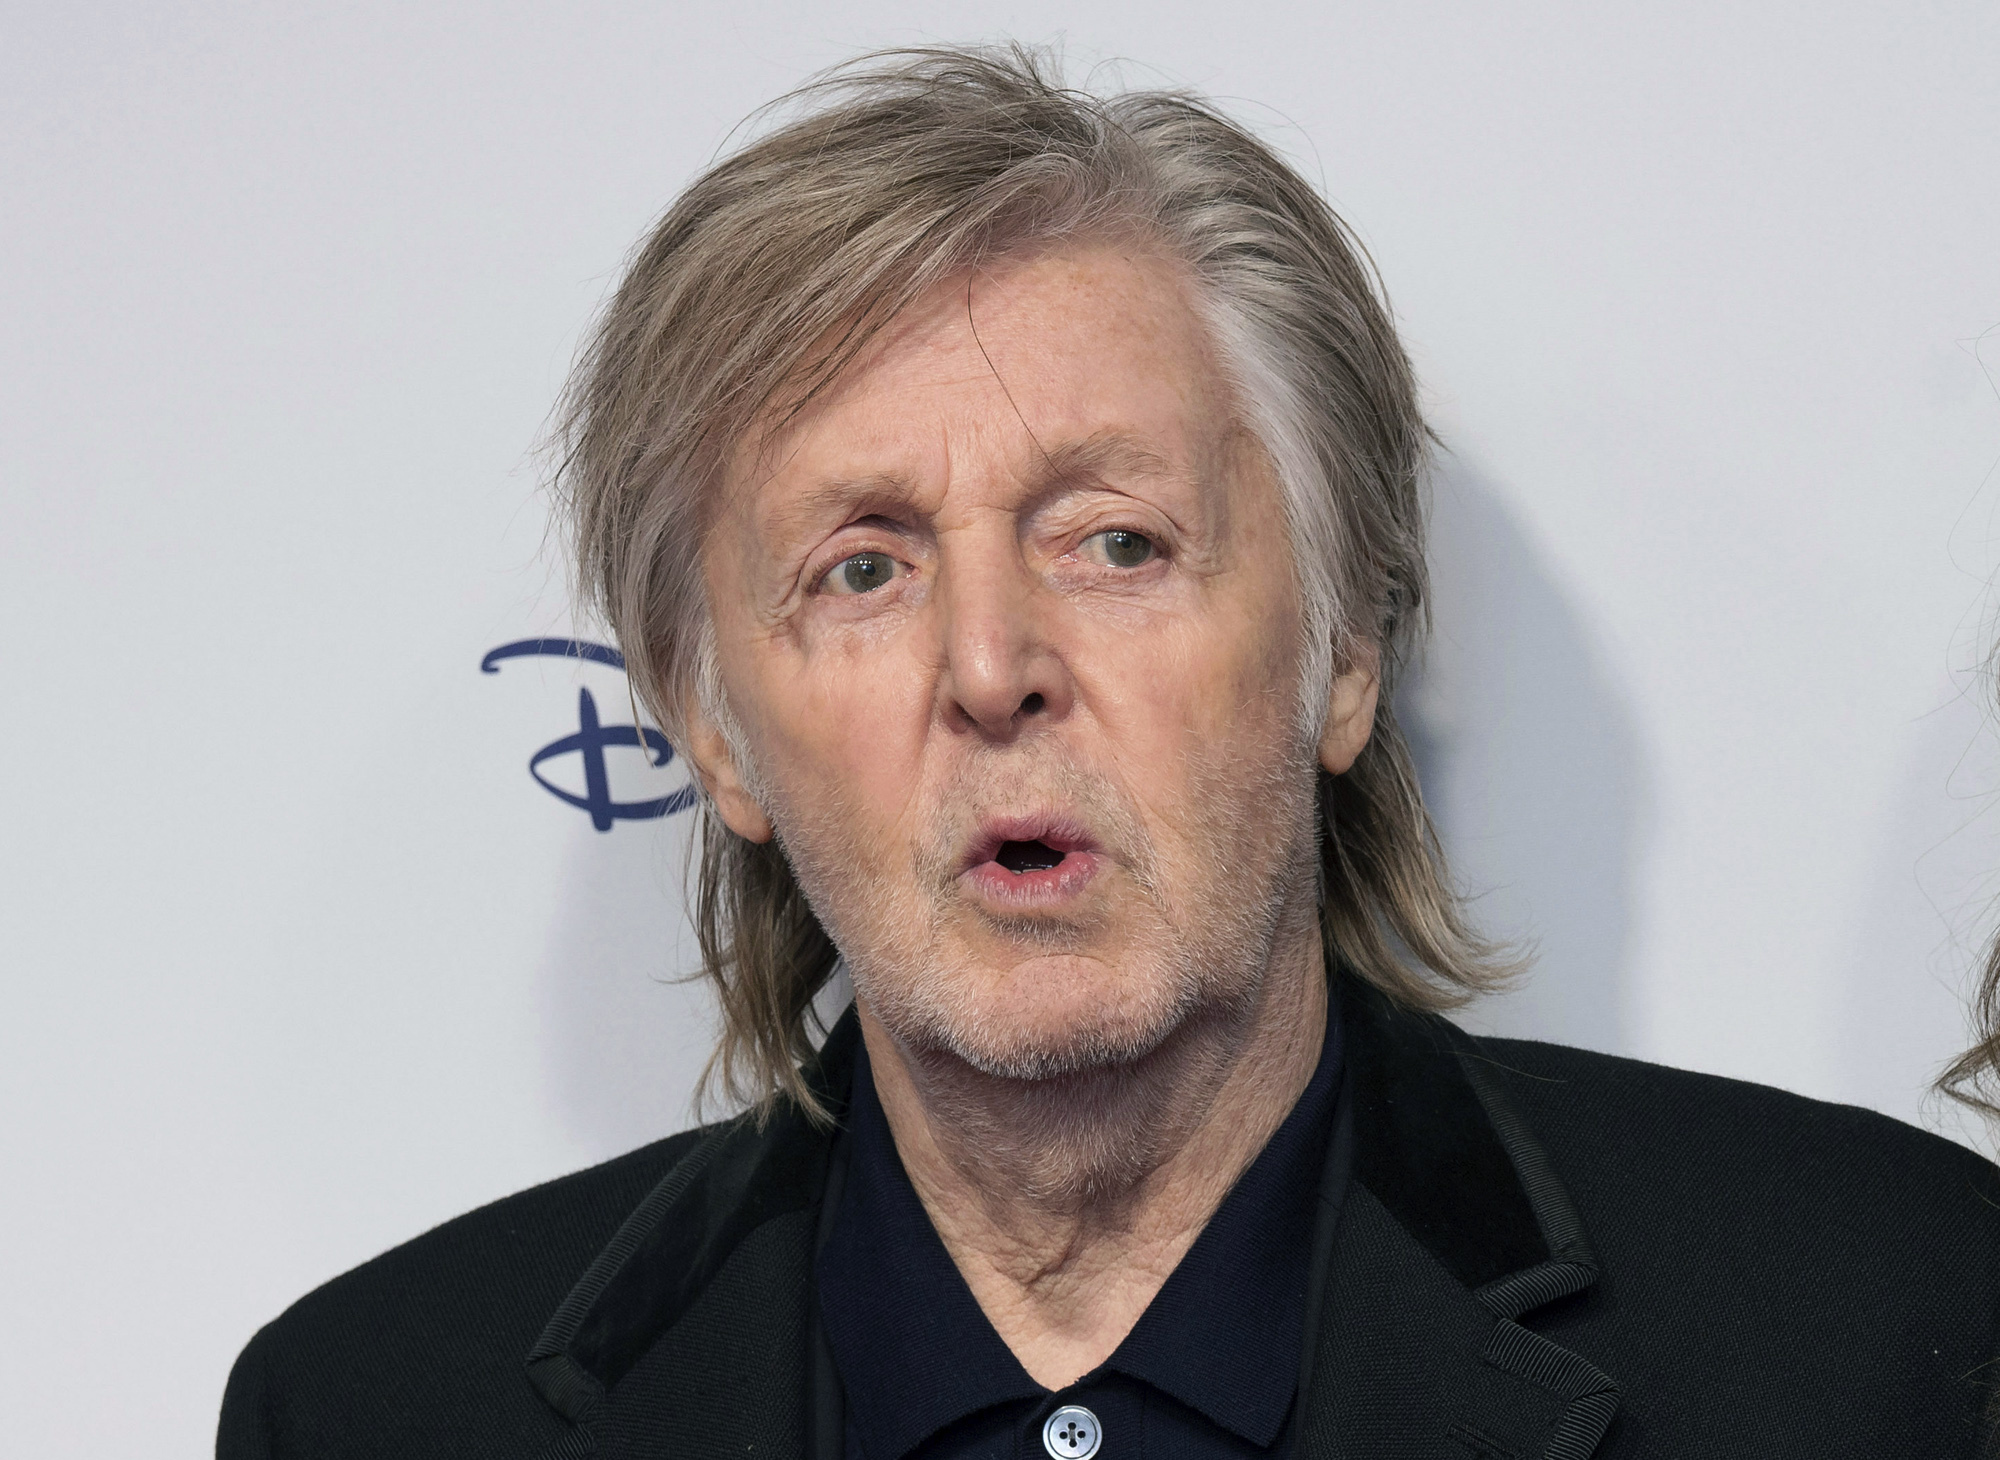 Paul McCartney posa a su llegada al estreno de la película "If These Walls Could Sing" en Londres, el 12 de diciembre de 202 (Scott Garfitt/Invision/AP, archivo)